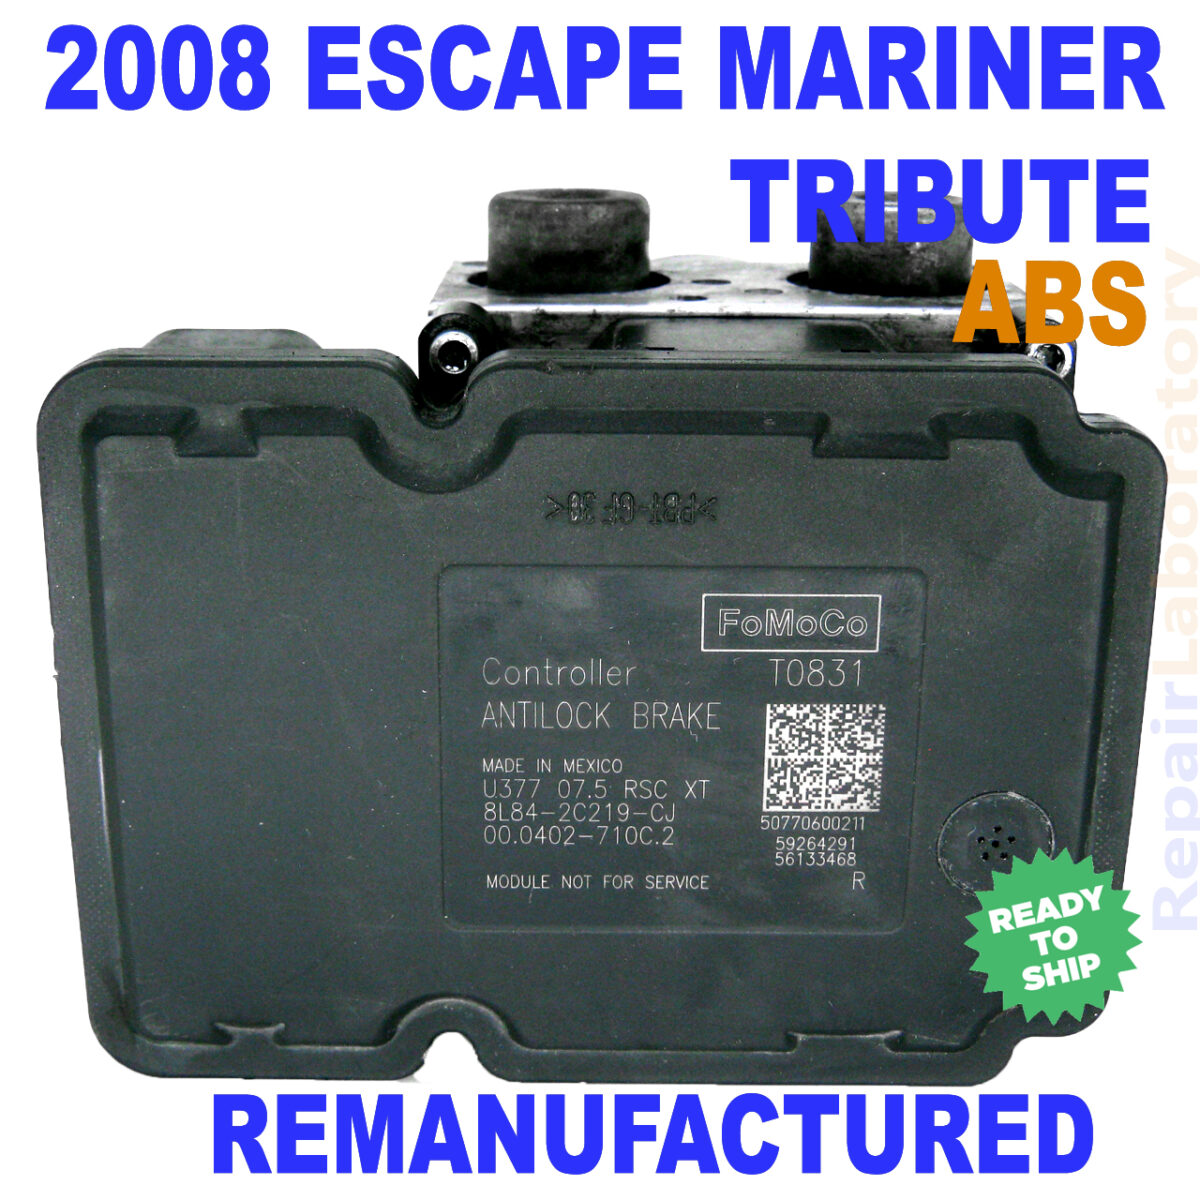 2008_escape_mariner_tribute_cm_8l84-2C219-cj